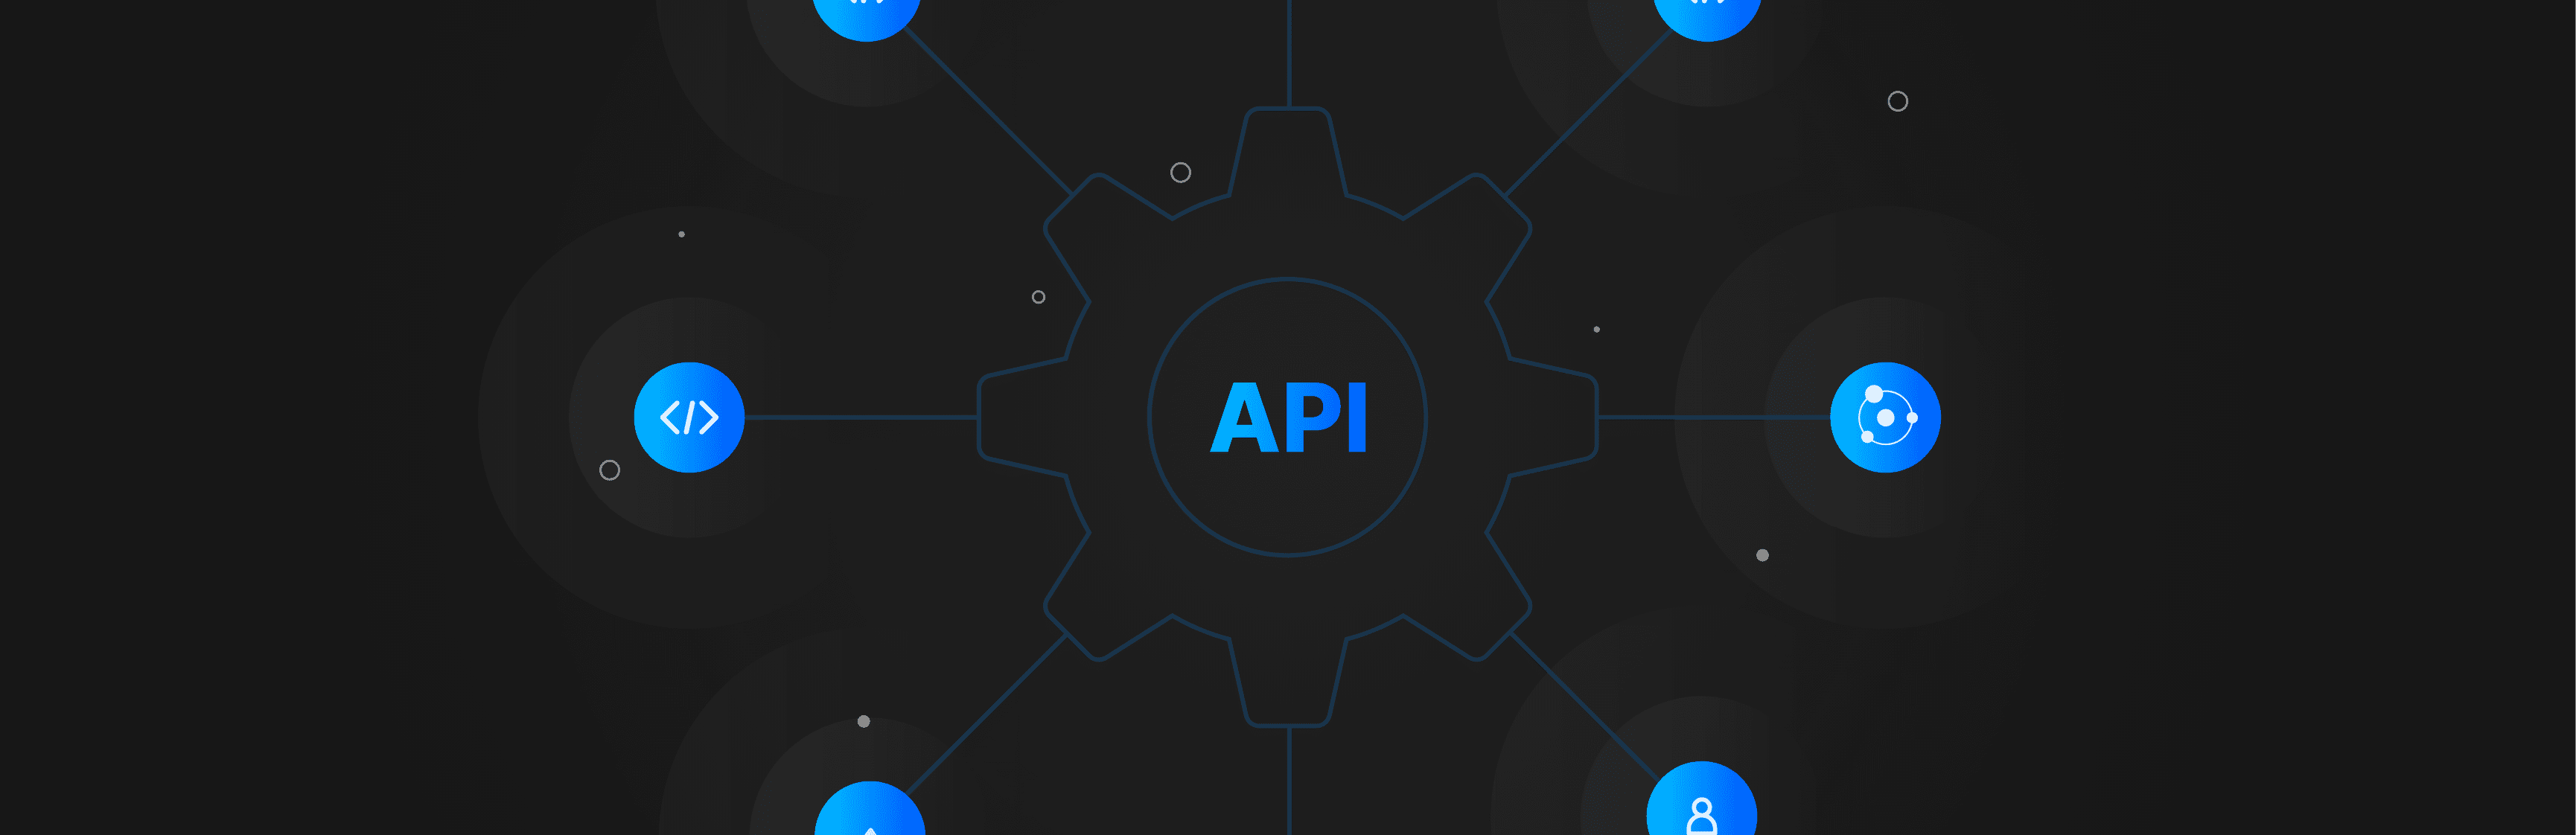 How To Improve API Adoption With A Platform-Based Approach